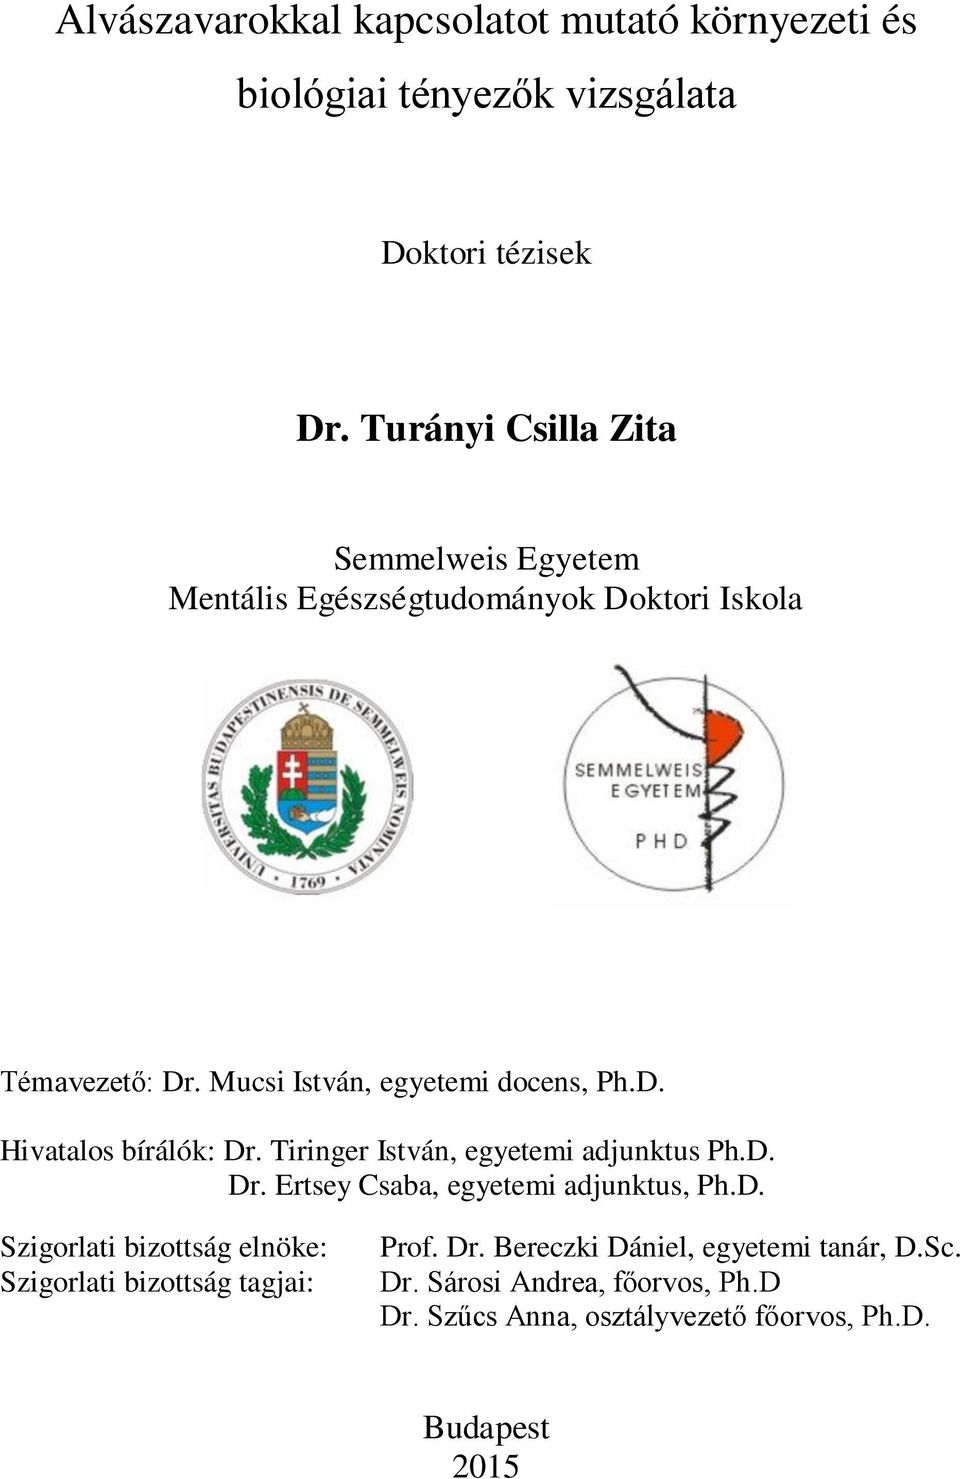 Tiringer István, egyetemi adjunktus Ph.D. Dr. Ertsey Csaba, egyetemi adjunktus, Ph.D. Szigorlati bizottság elnöke: Szigorlati bizottság tagjai: Prof.